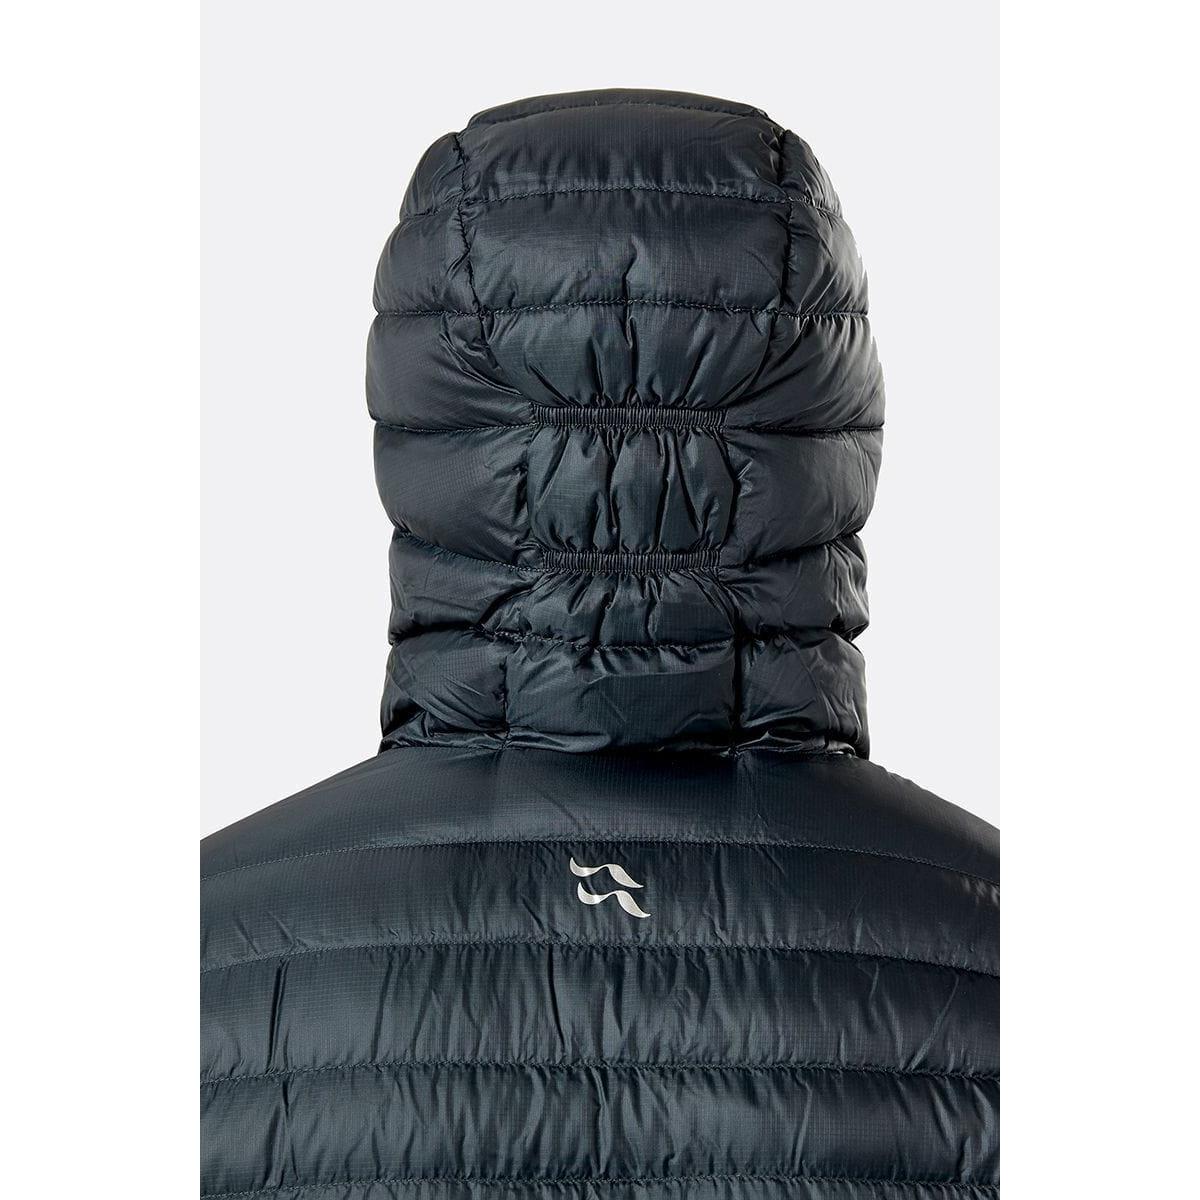 Rab Men's Microlight Alpine Jacket - Grey